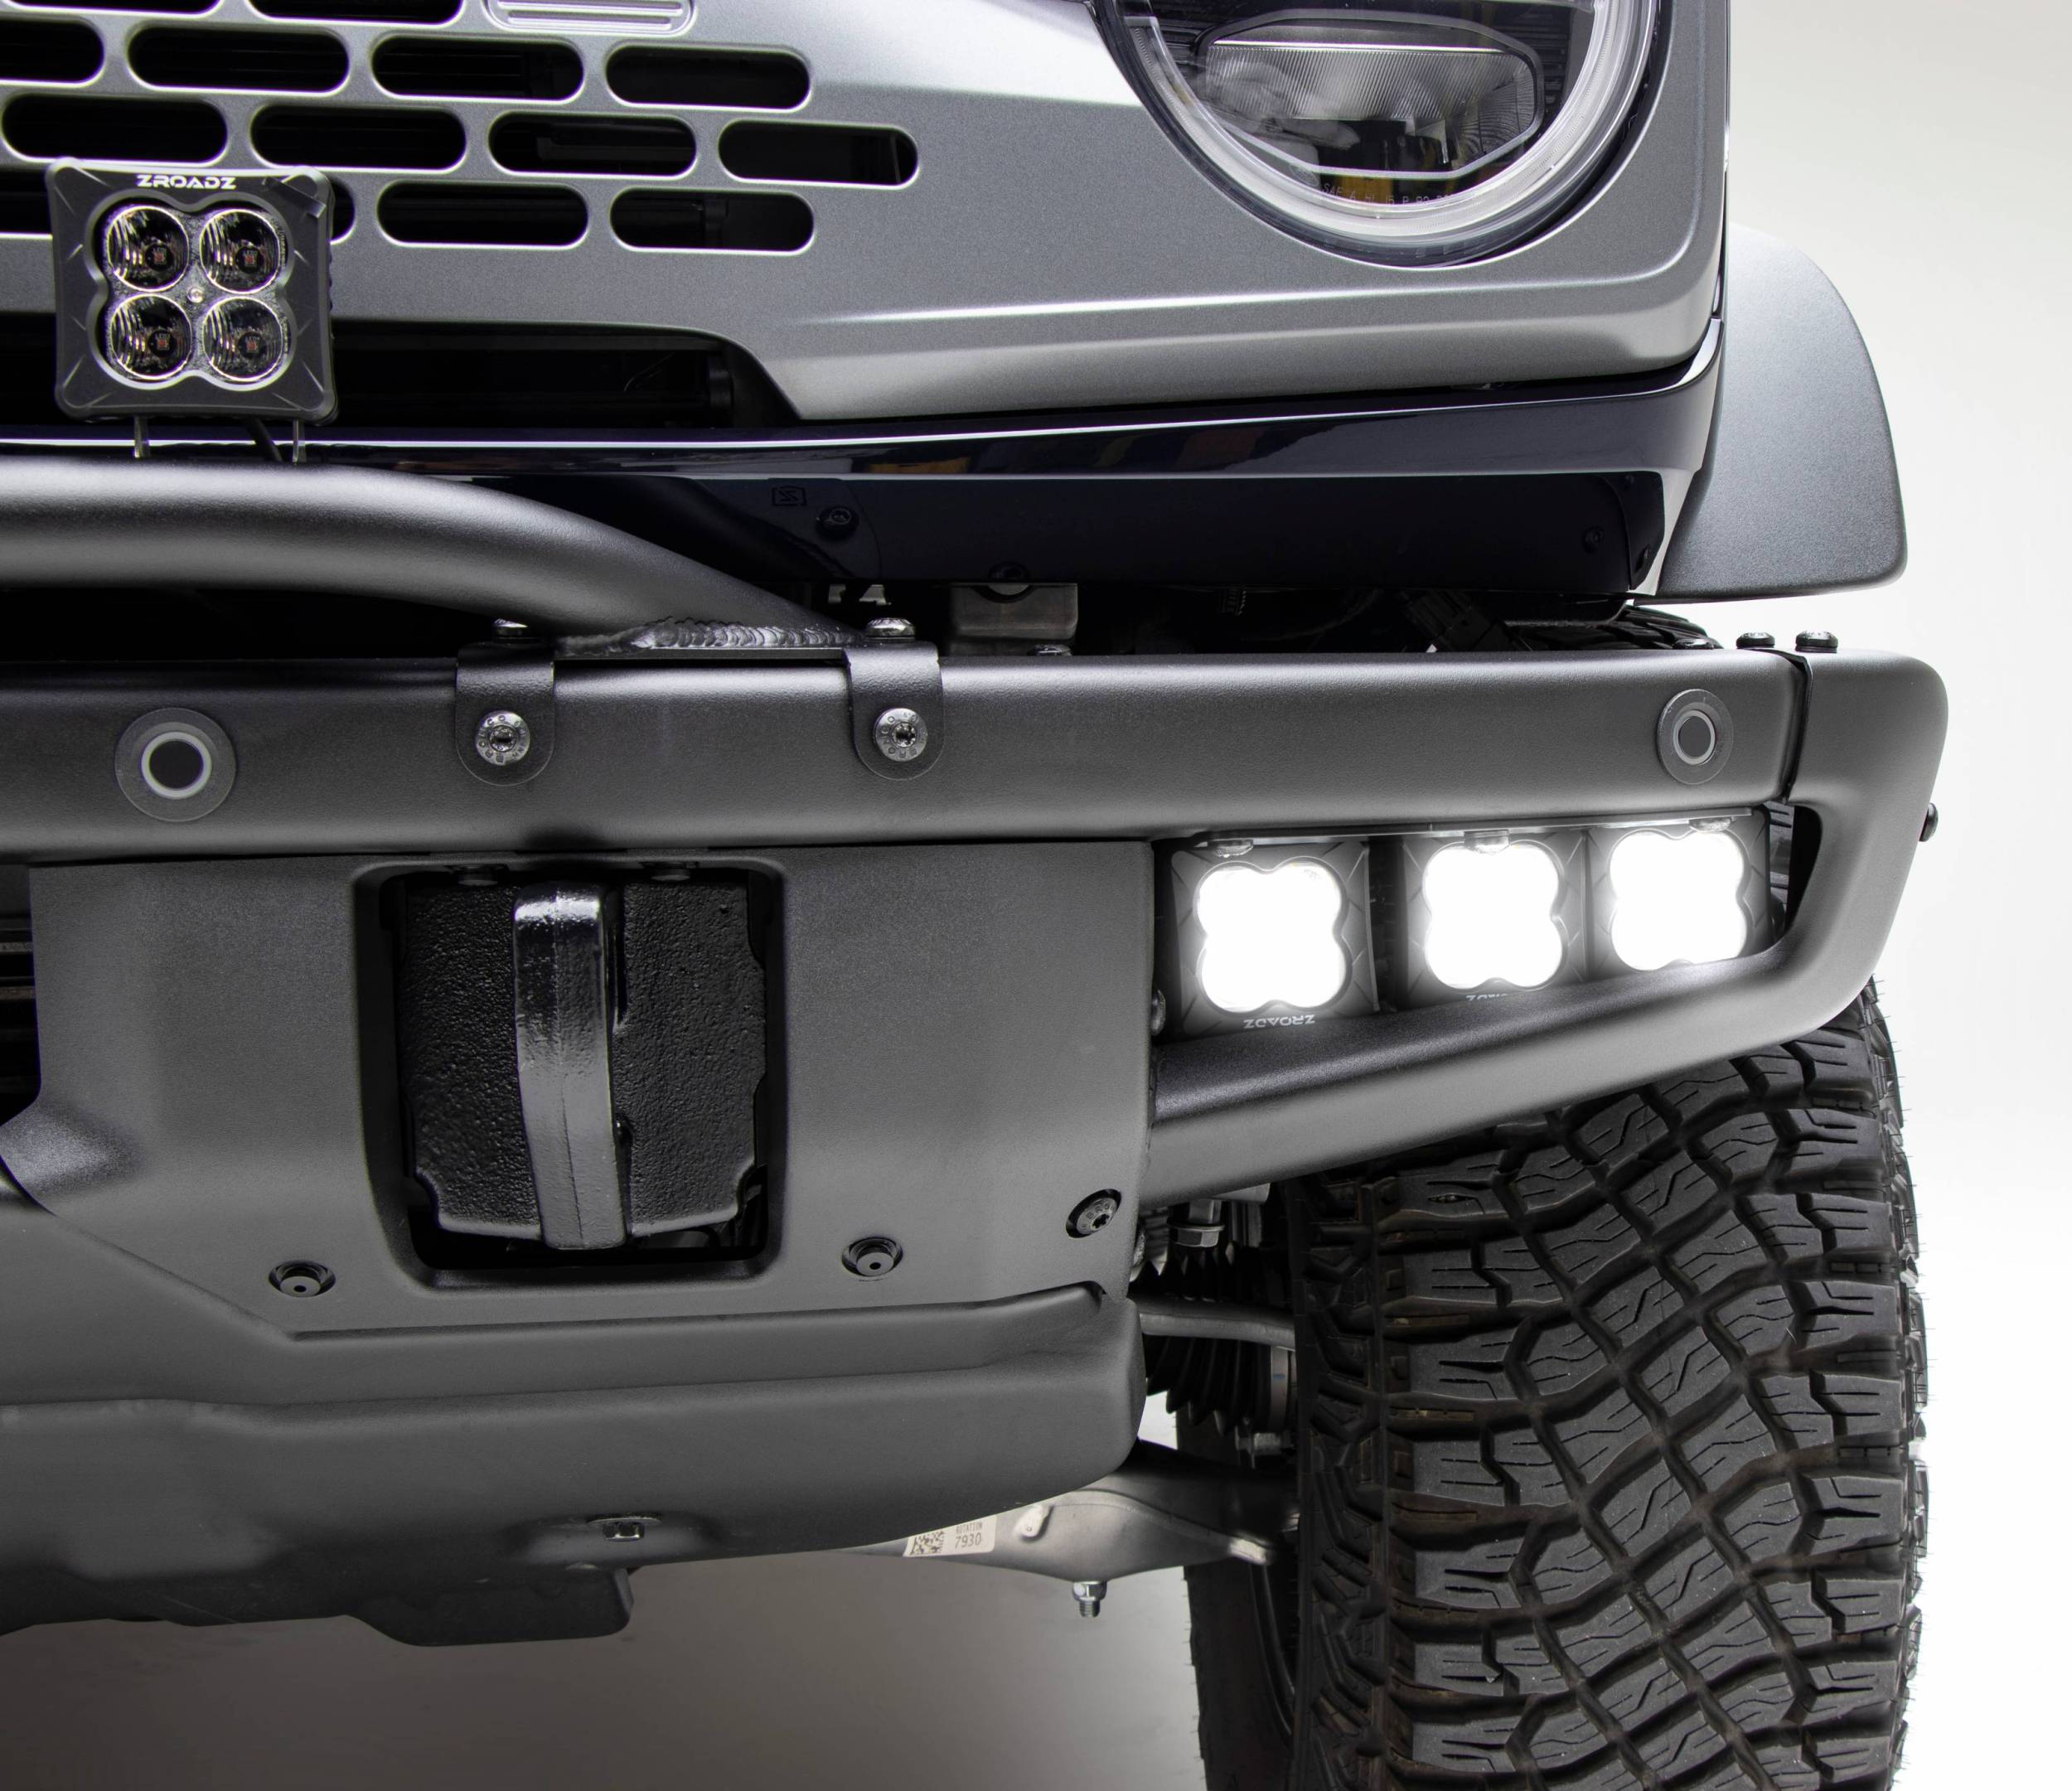 ZROADZ OFF ROAD PRODUCTS - 2021-2023 Ford Bronco Front Bumper Fog LED KIT, Includes (6) 3-Inch ZROADZ White LED Pod Lights - Part # Z325401-KIT